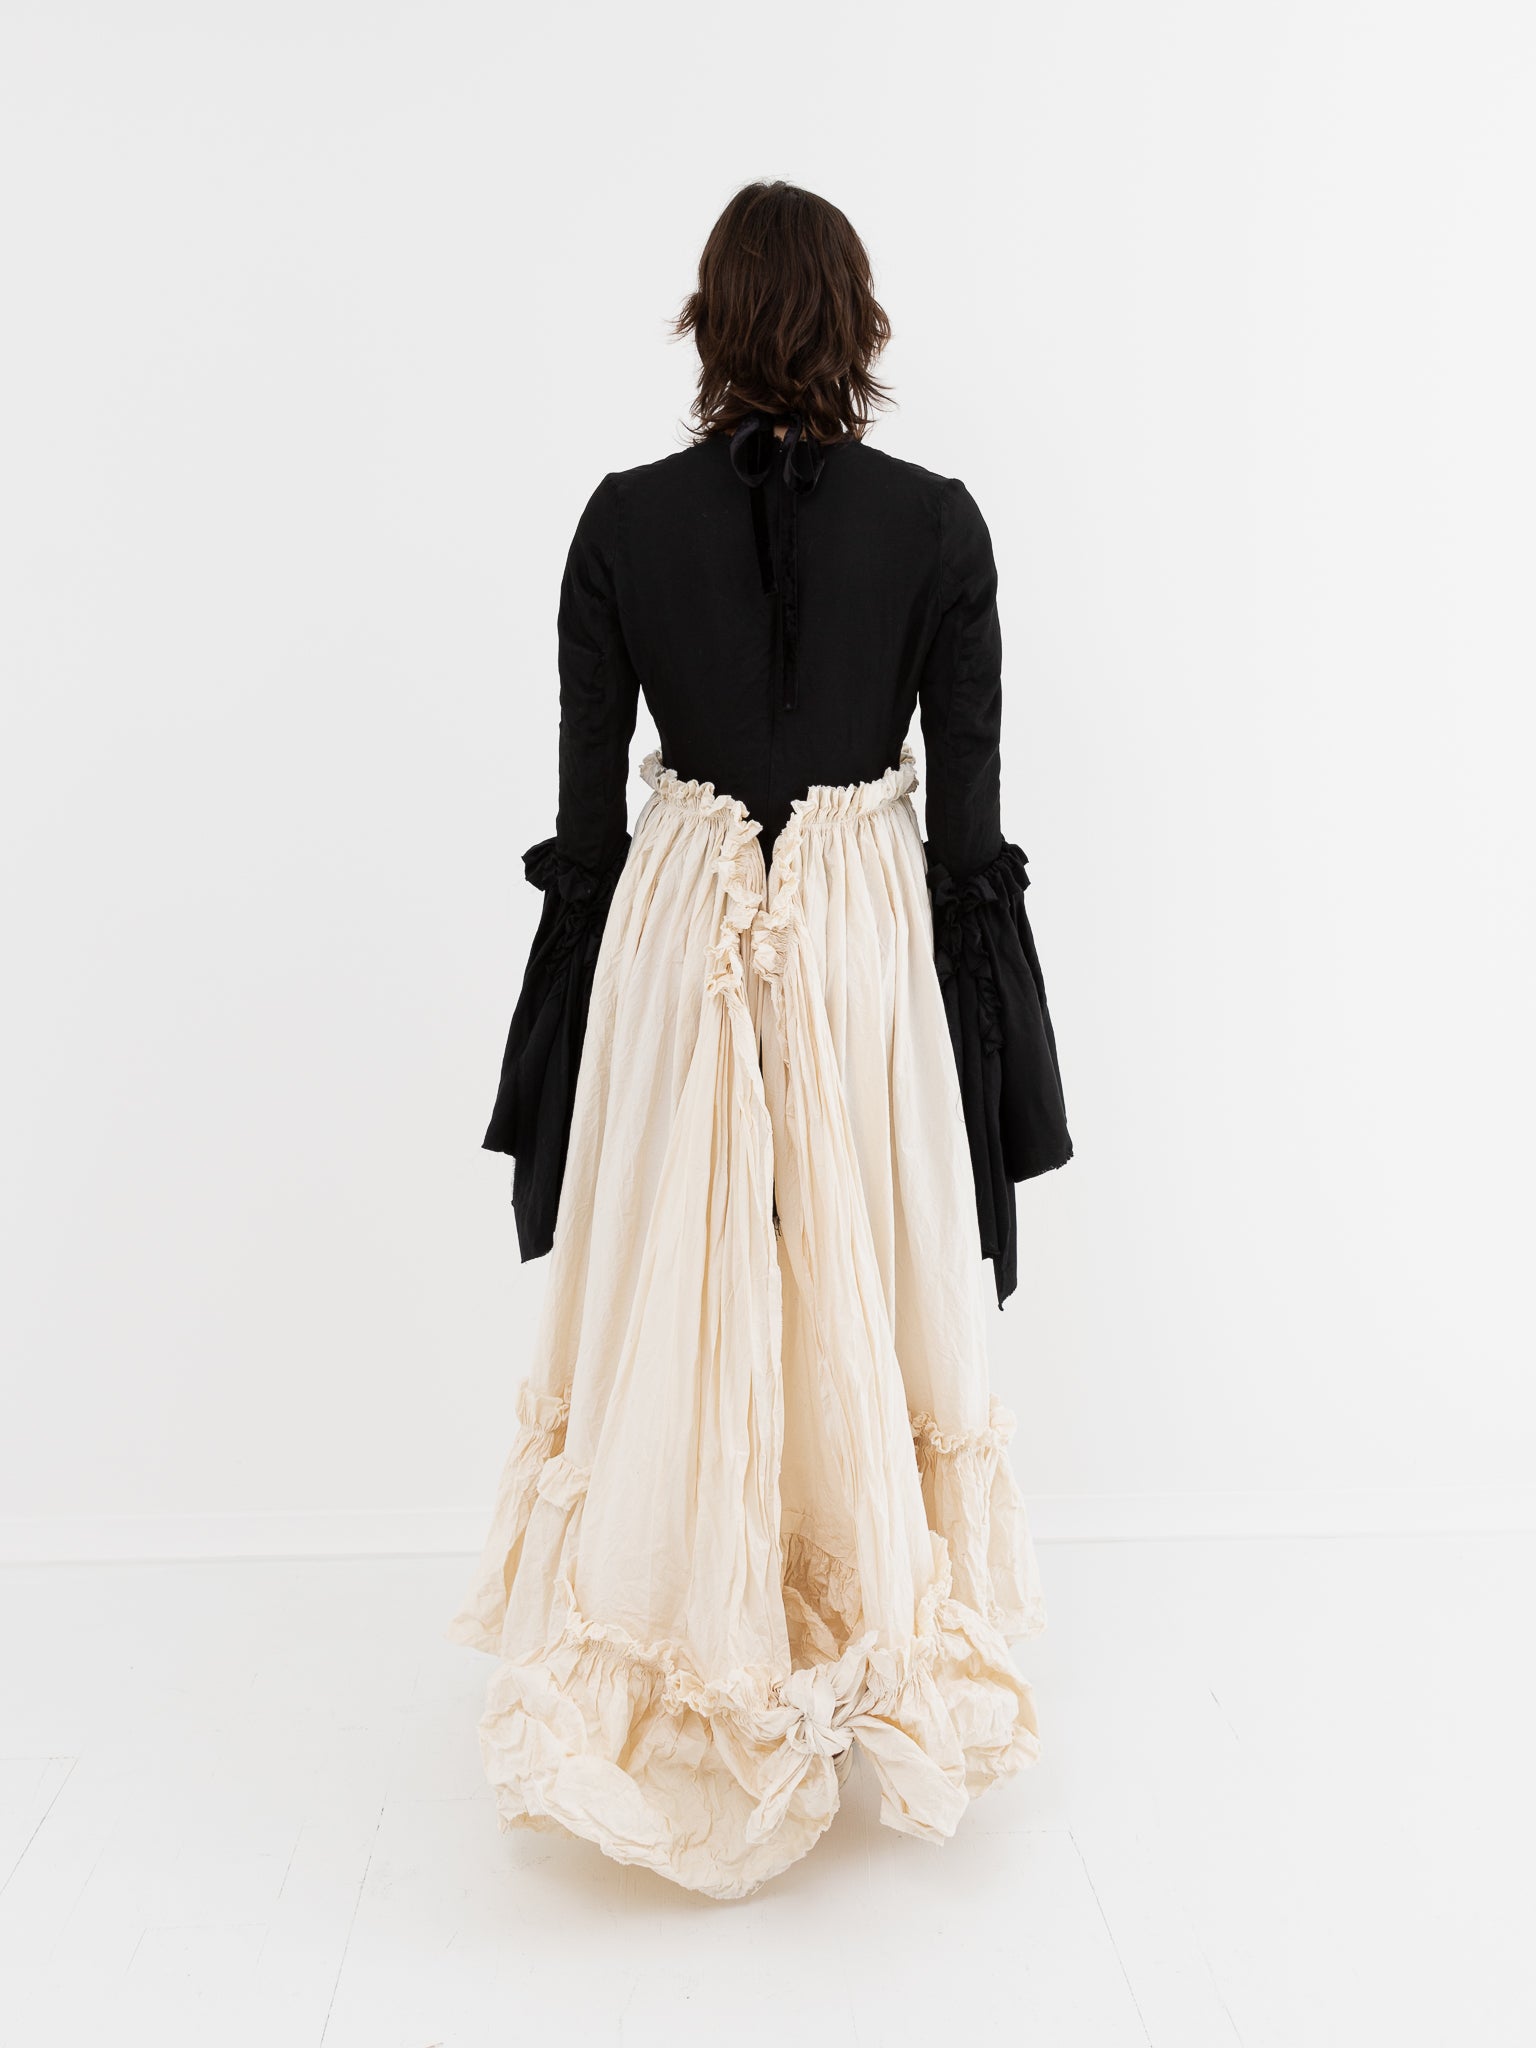 Elena Dawson Chateau Dress - Worthwhile, Inc.